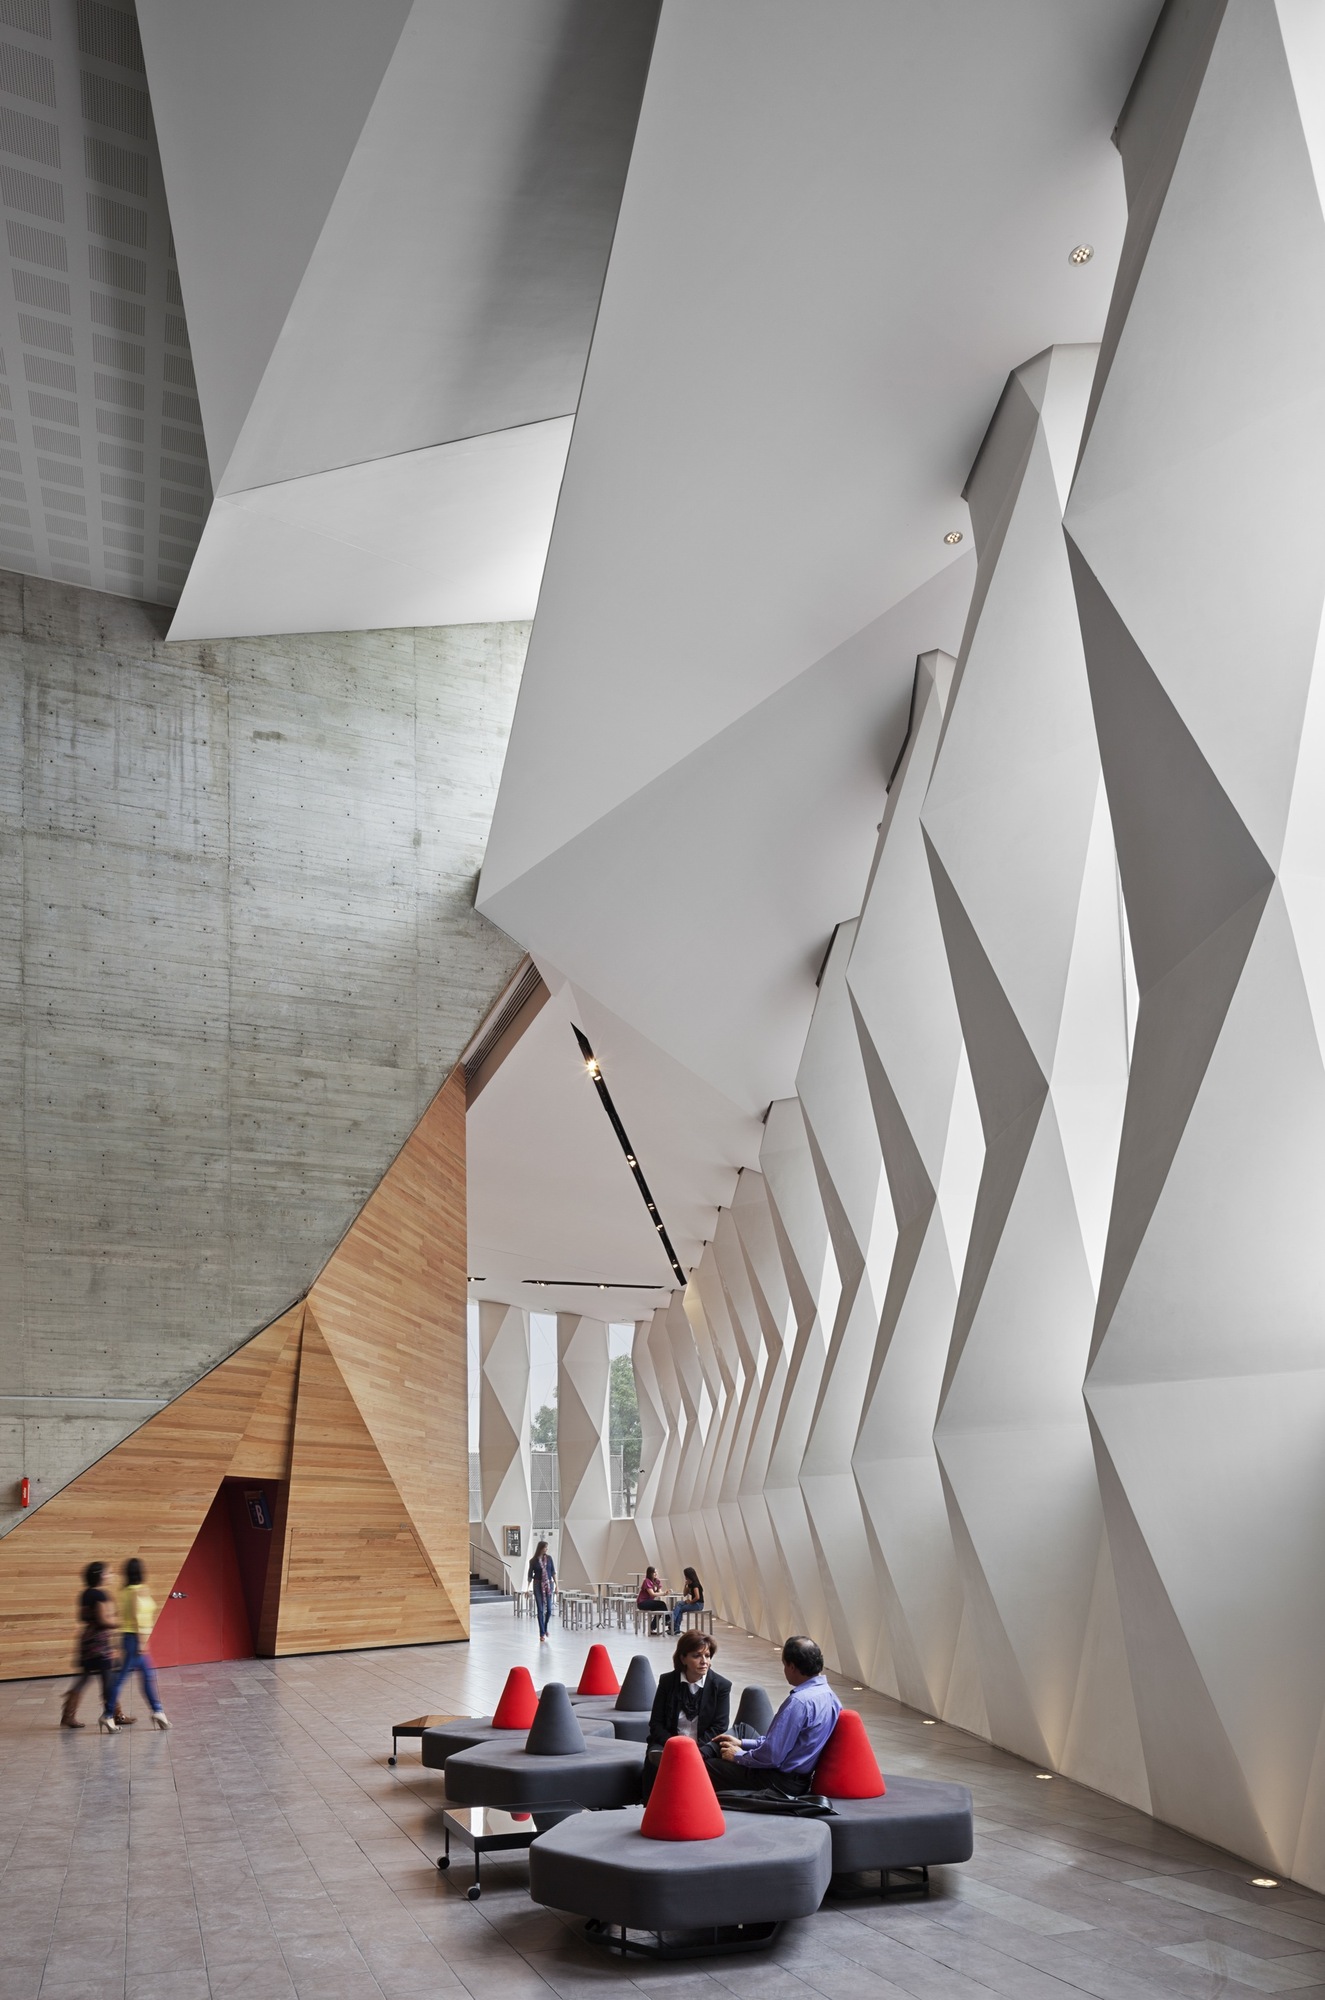 Centre Culturel / Roberto Cantoral / Broissin Architects